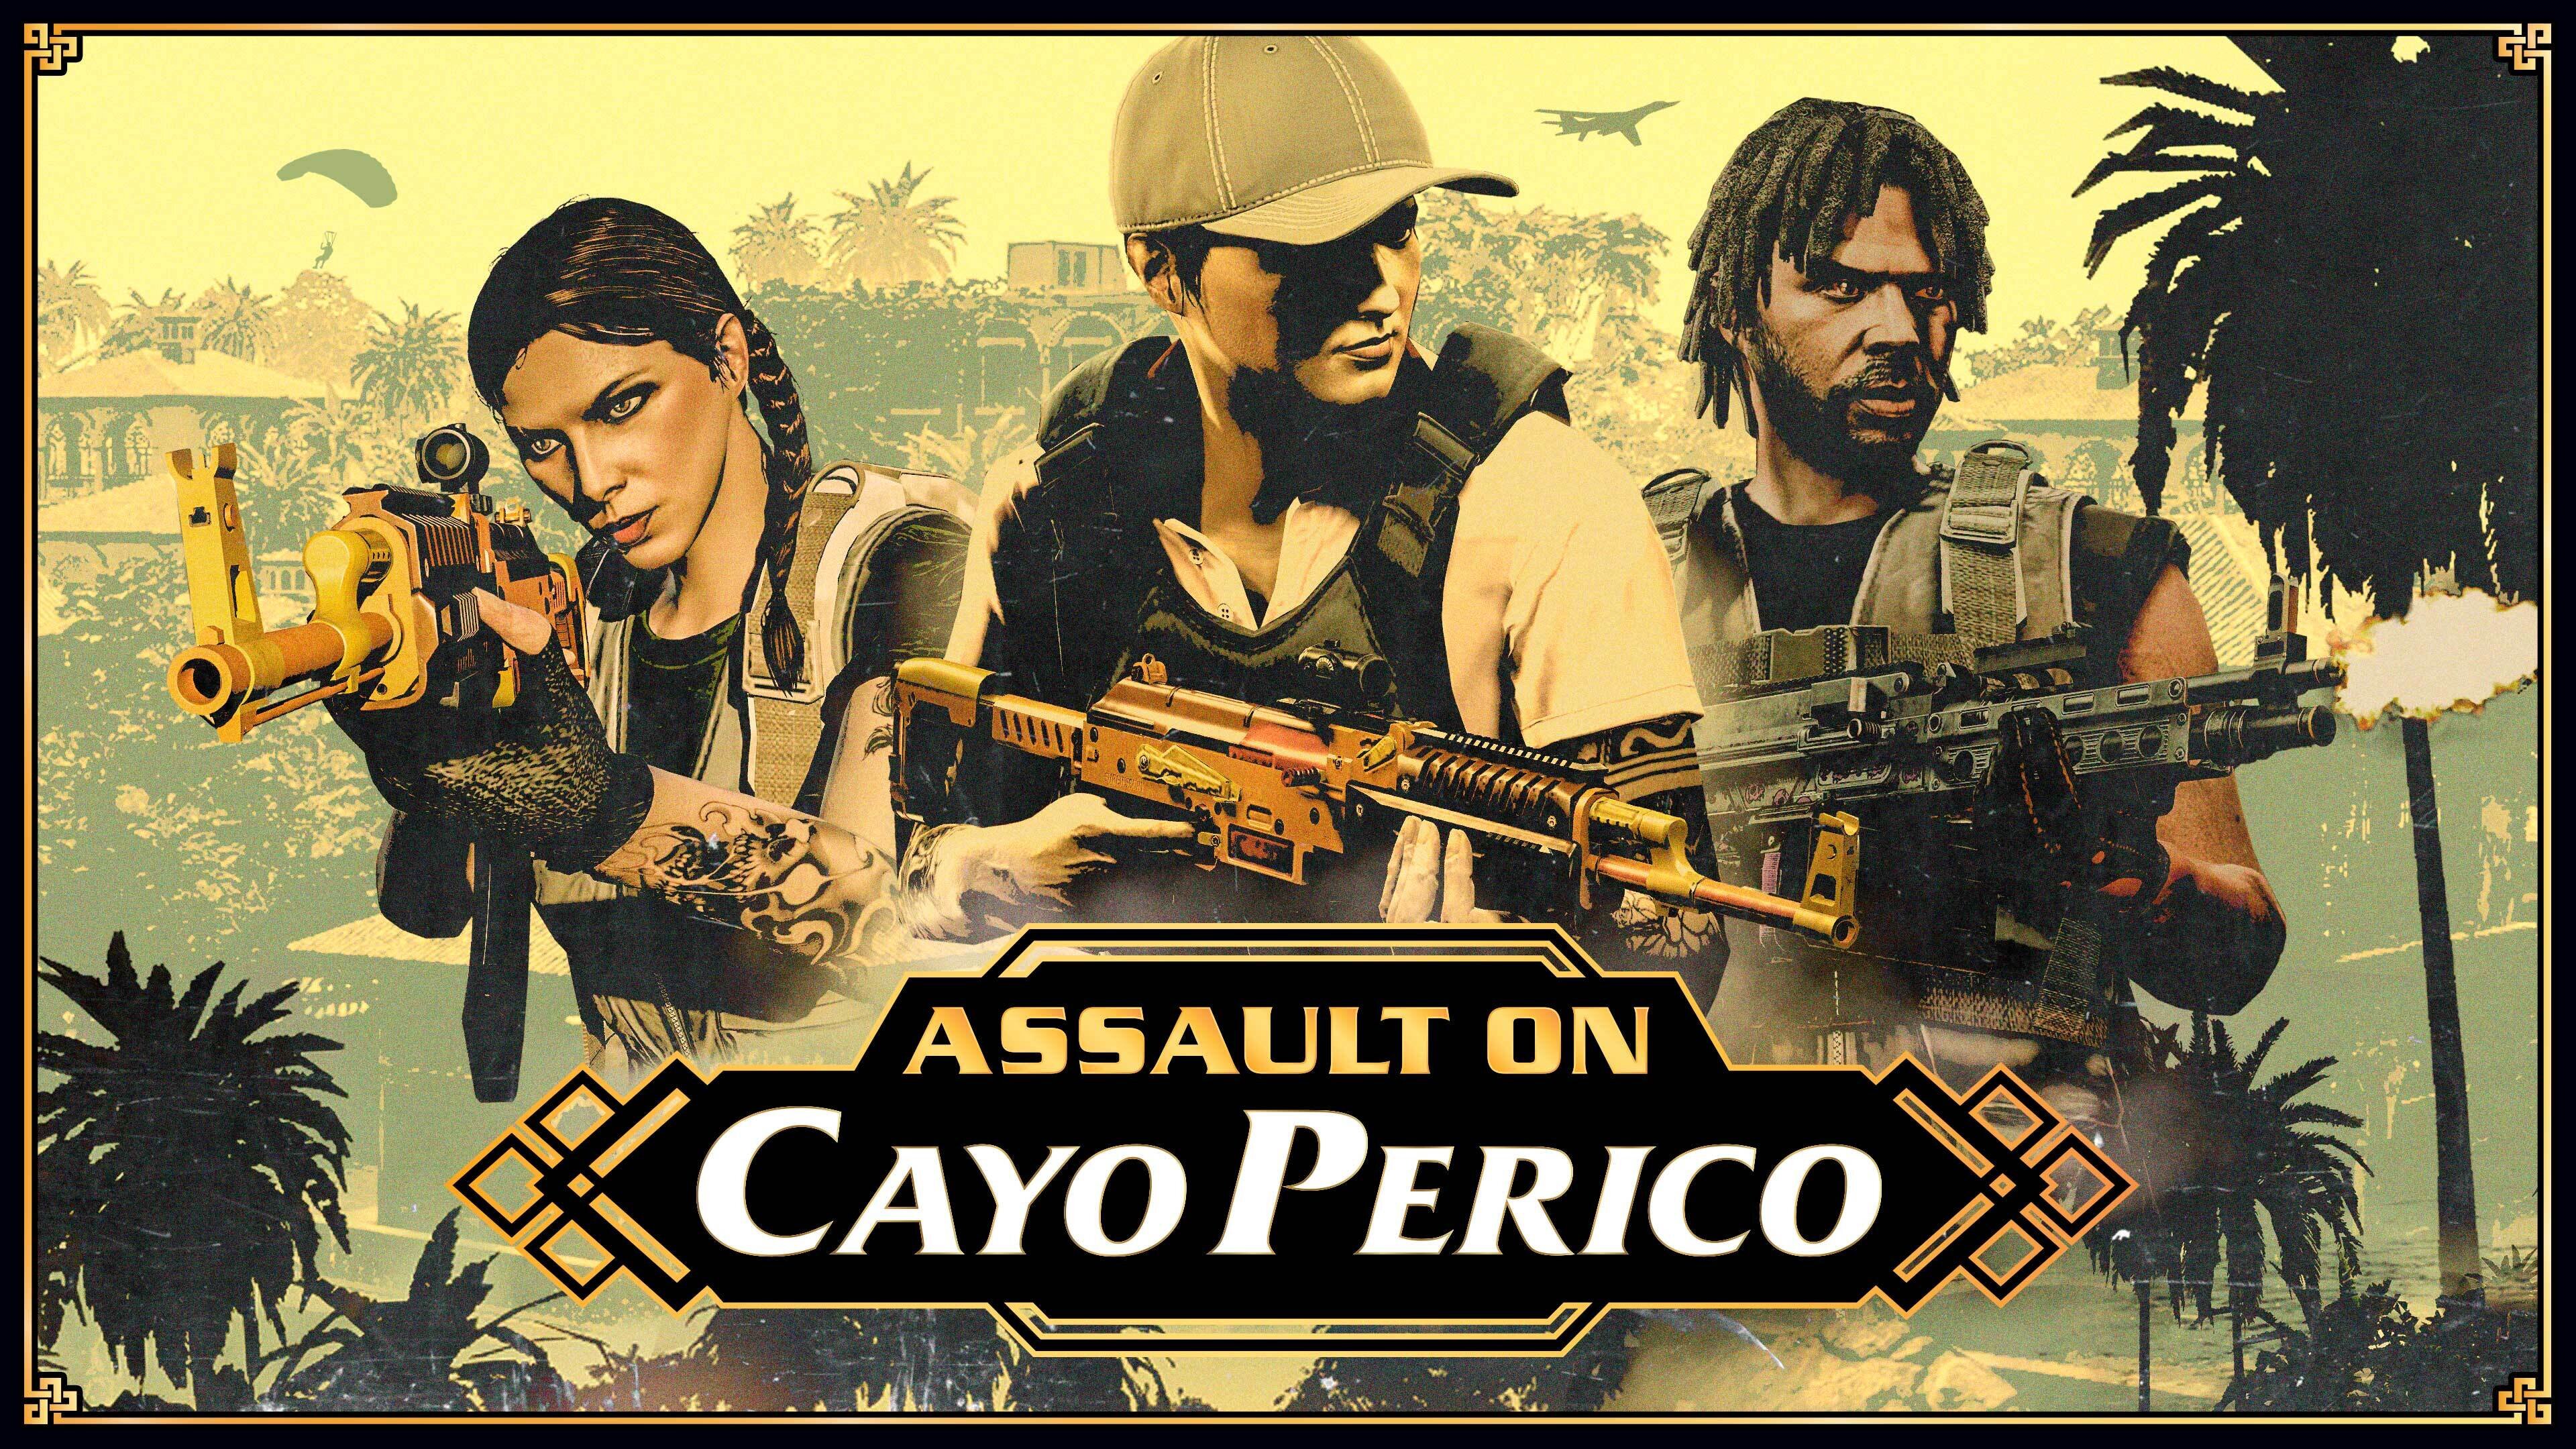 More information about "Assault on Cayo Perico, een nieuwe Adversary Mode op GTA Online"